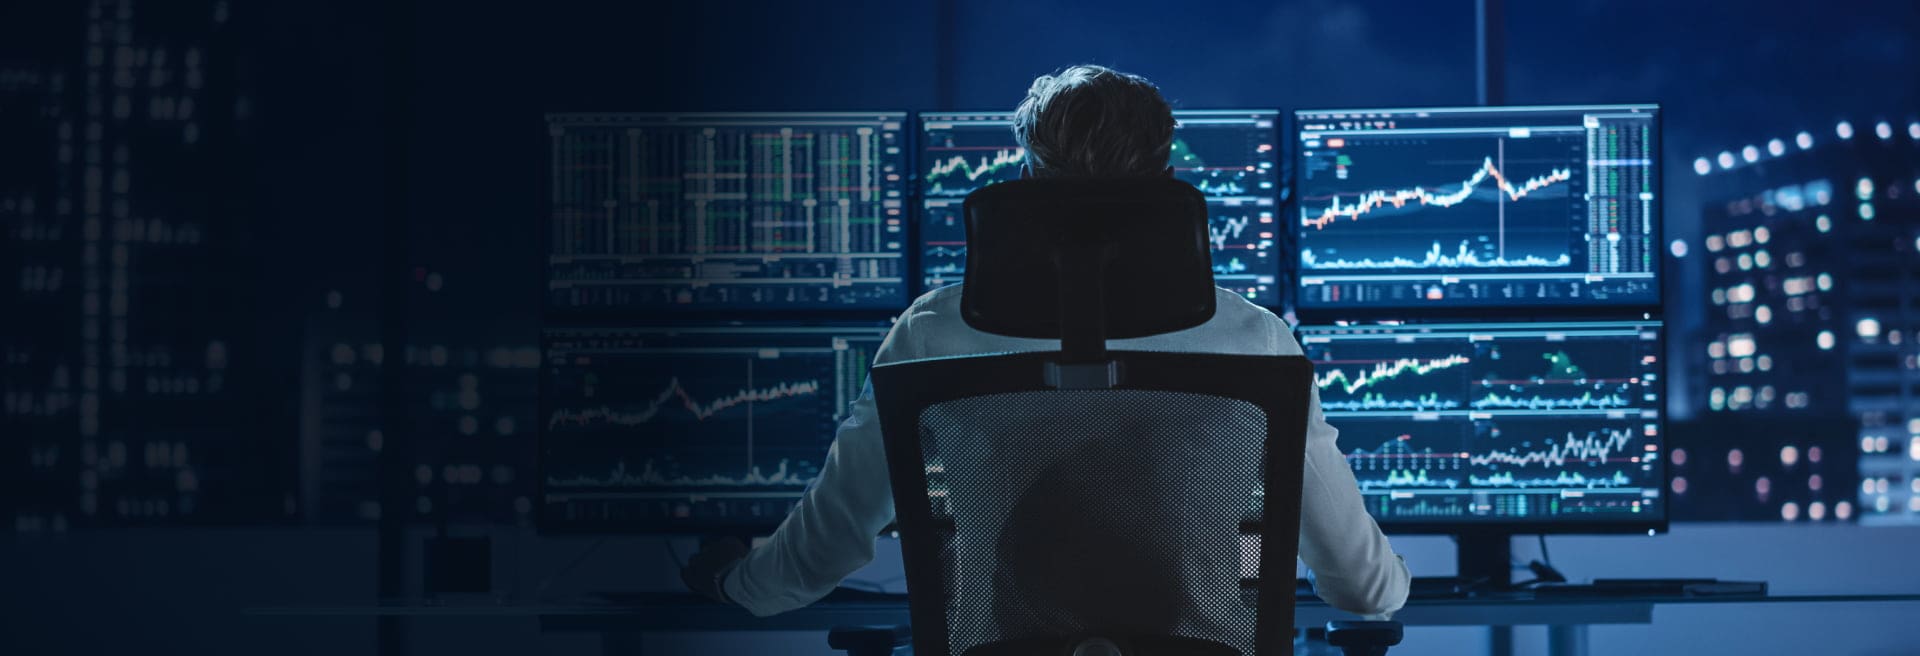 Man sitting in chair analysing market data